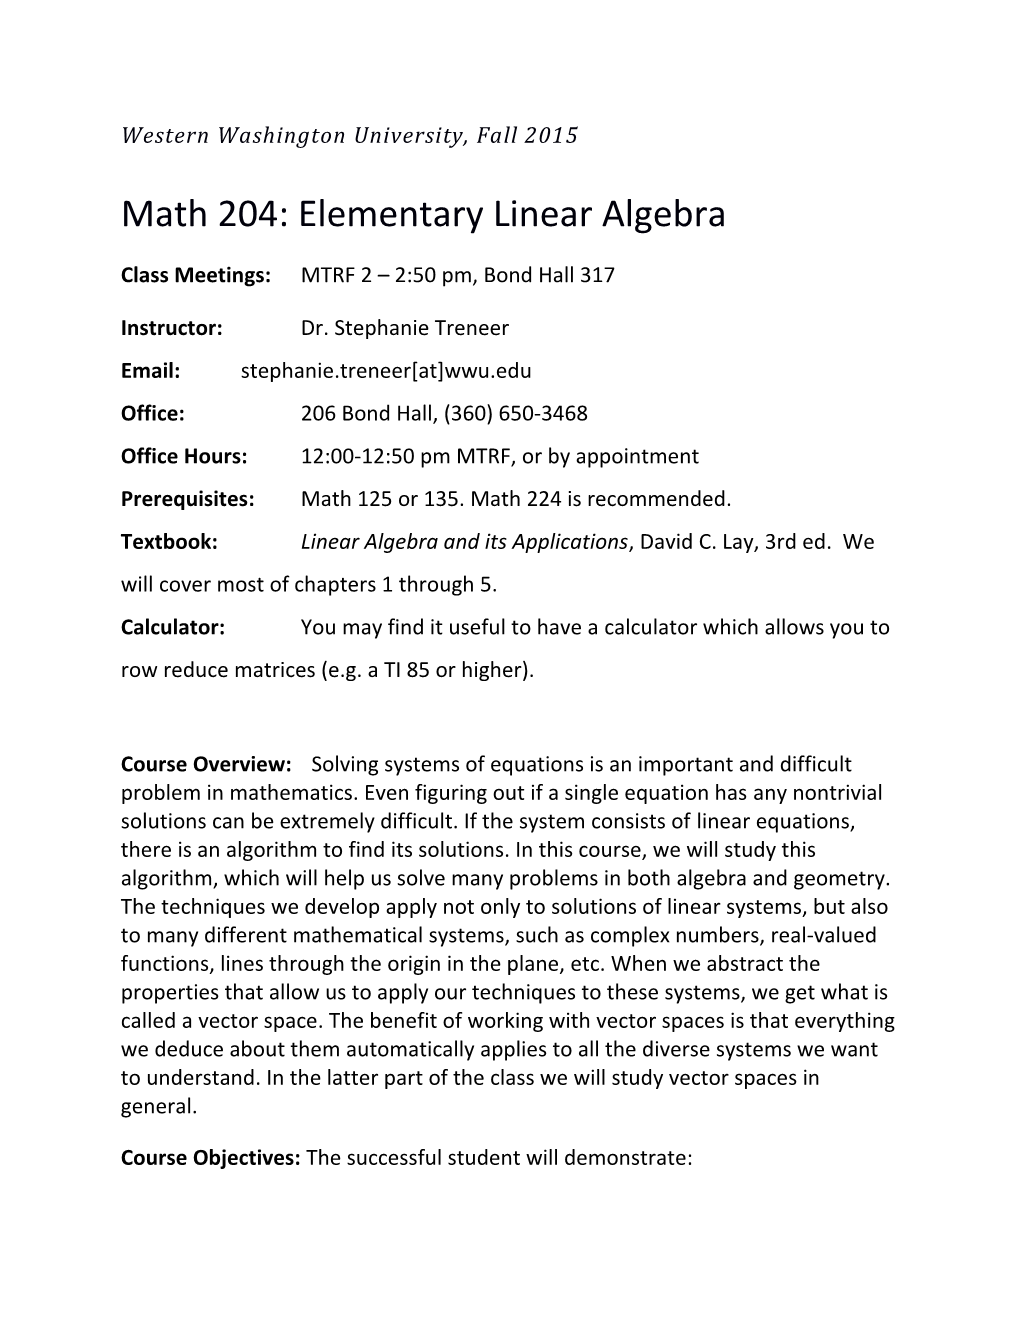 Math 204: Elementary Linear Algebra